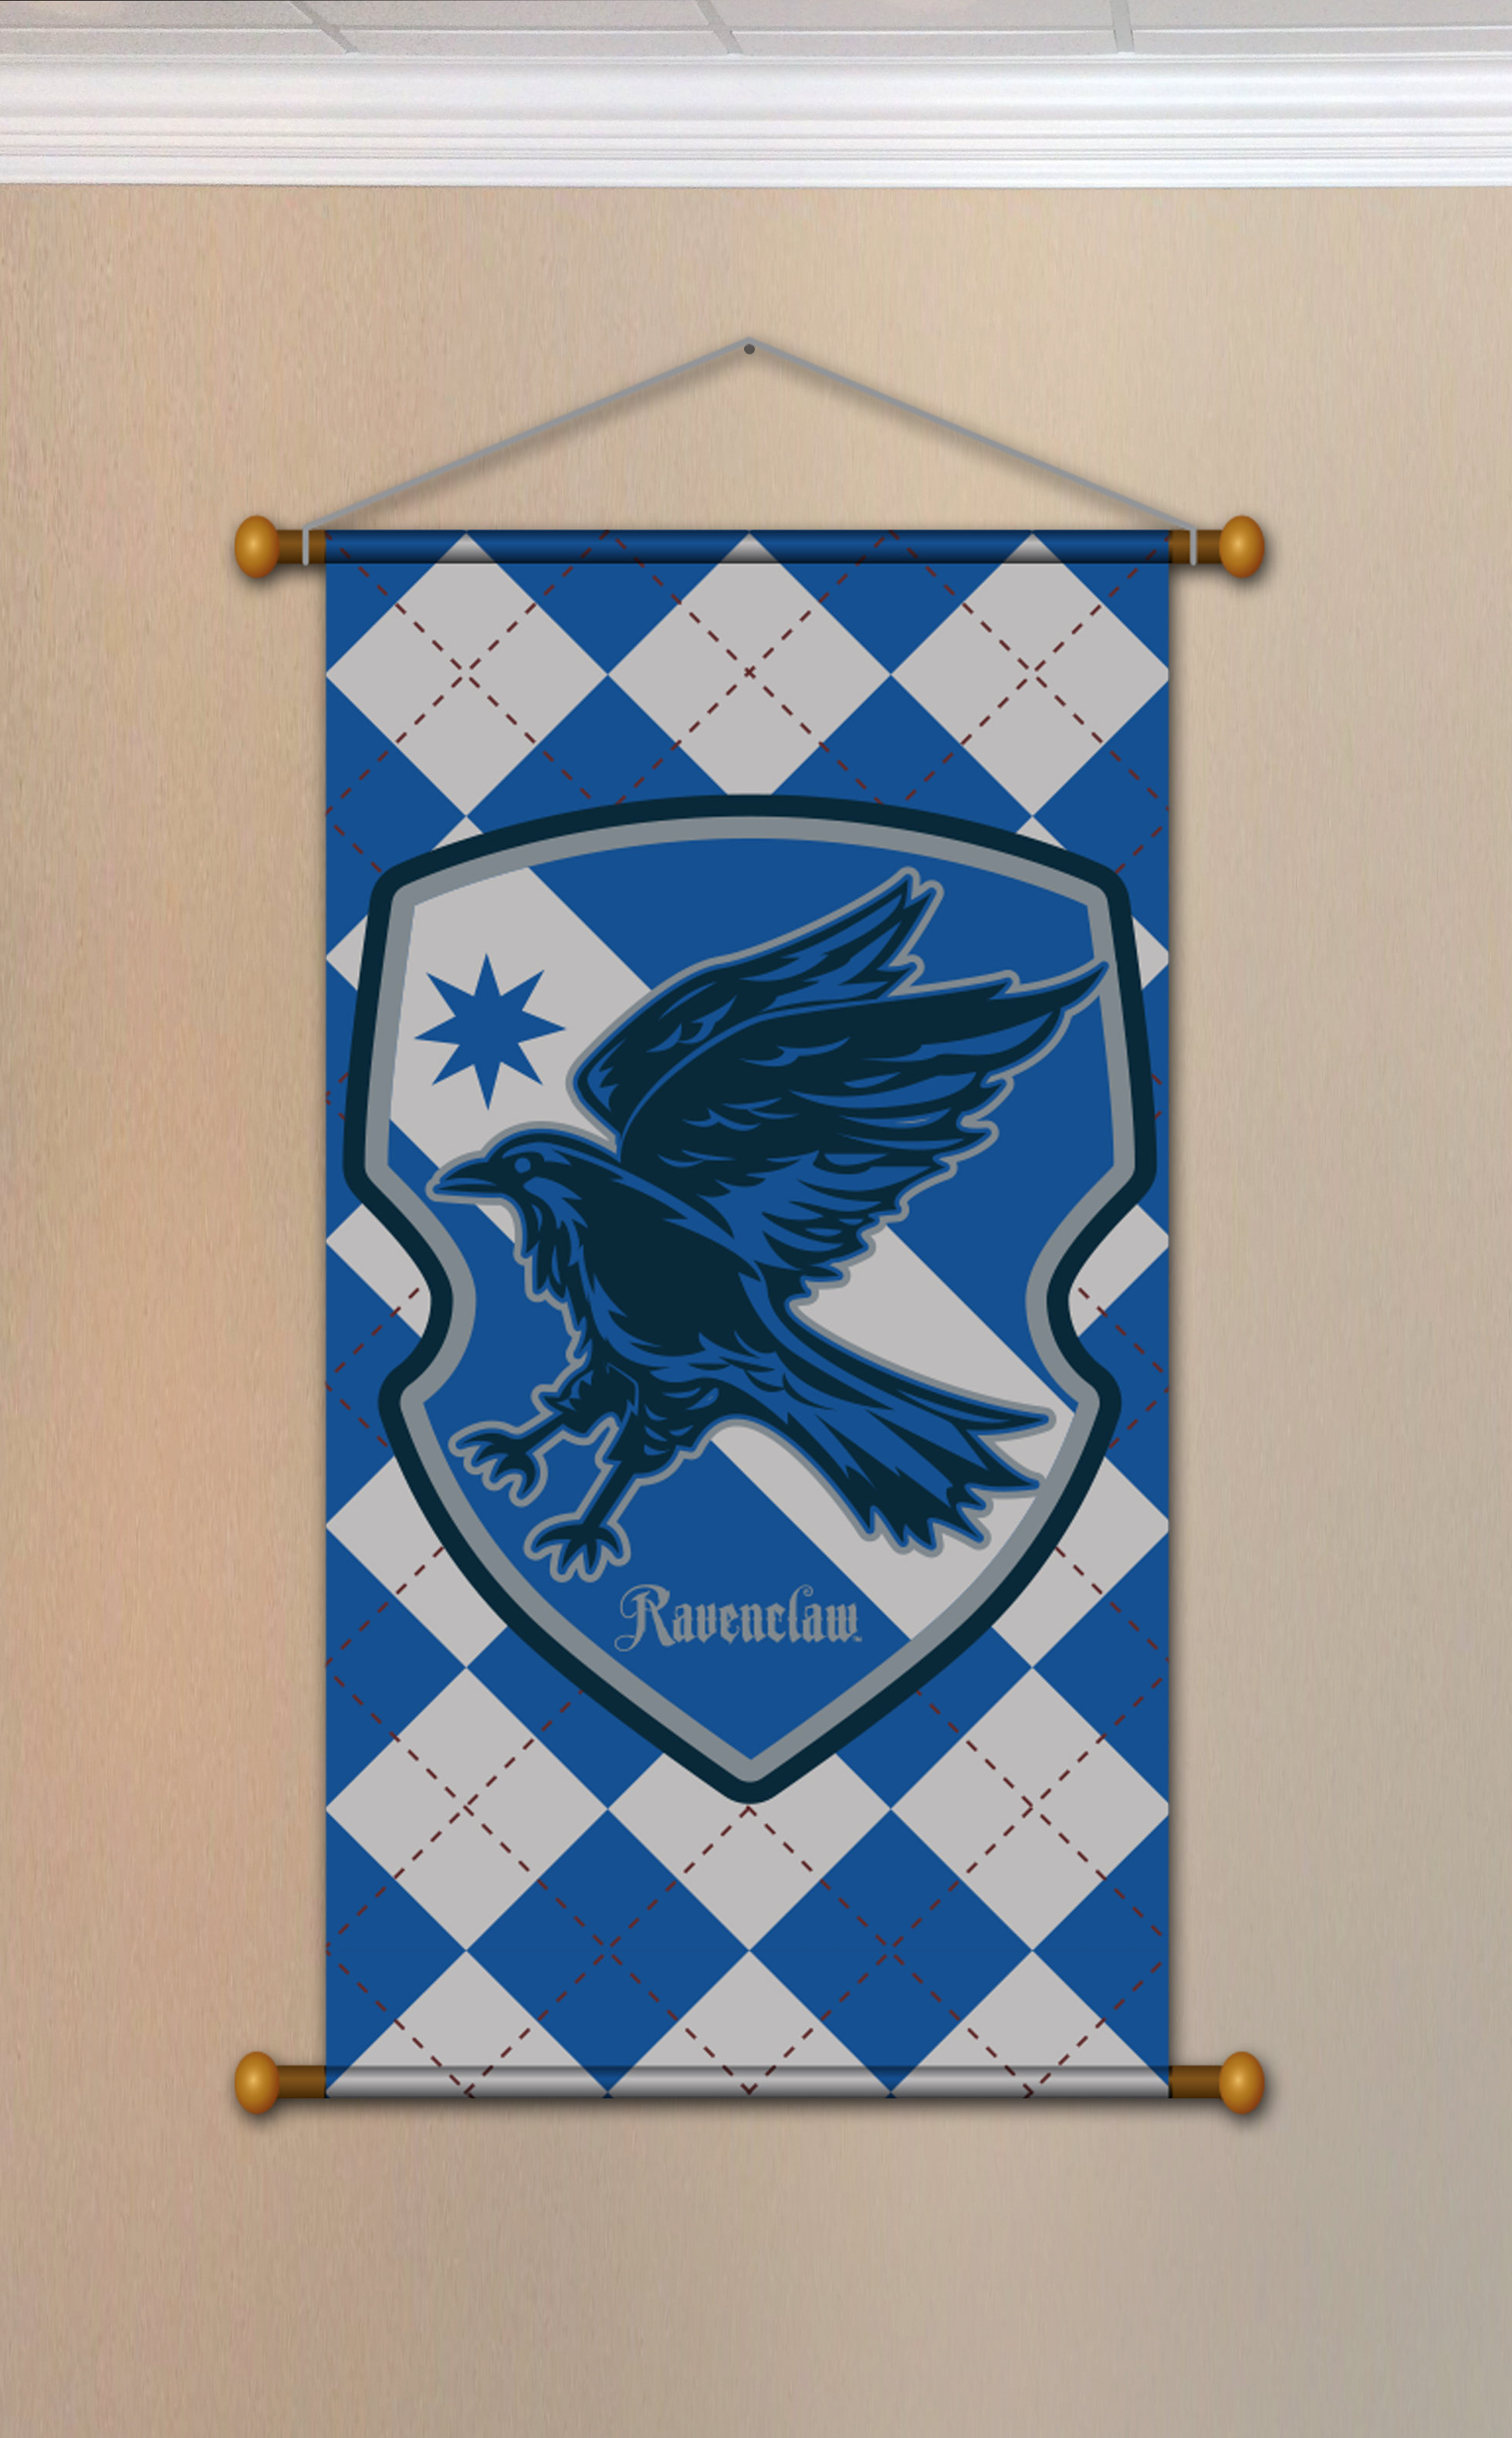 Cinereplicas Harry Potter - Wall Banner Gryffindor - Official License